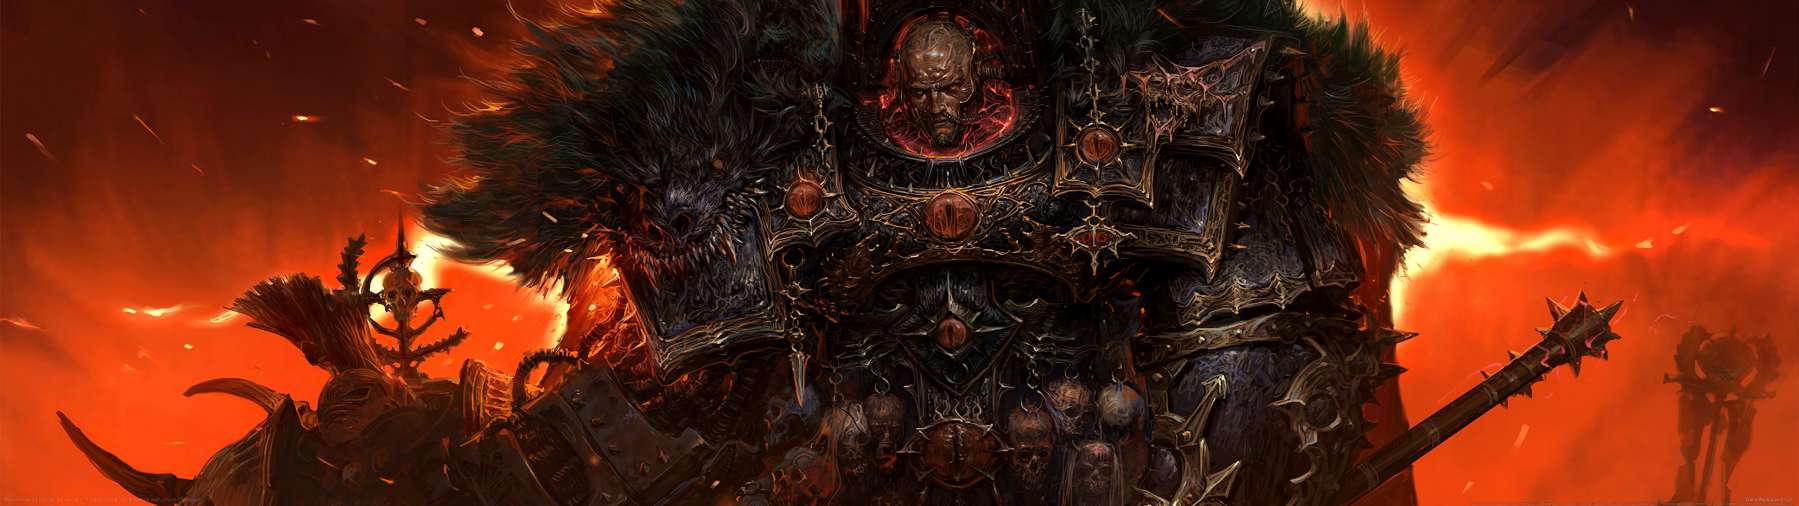 Warhammer 40,000 fan art superwide wallpaper or background 02